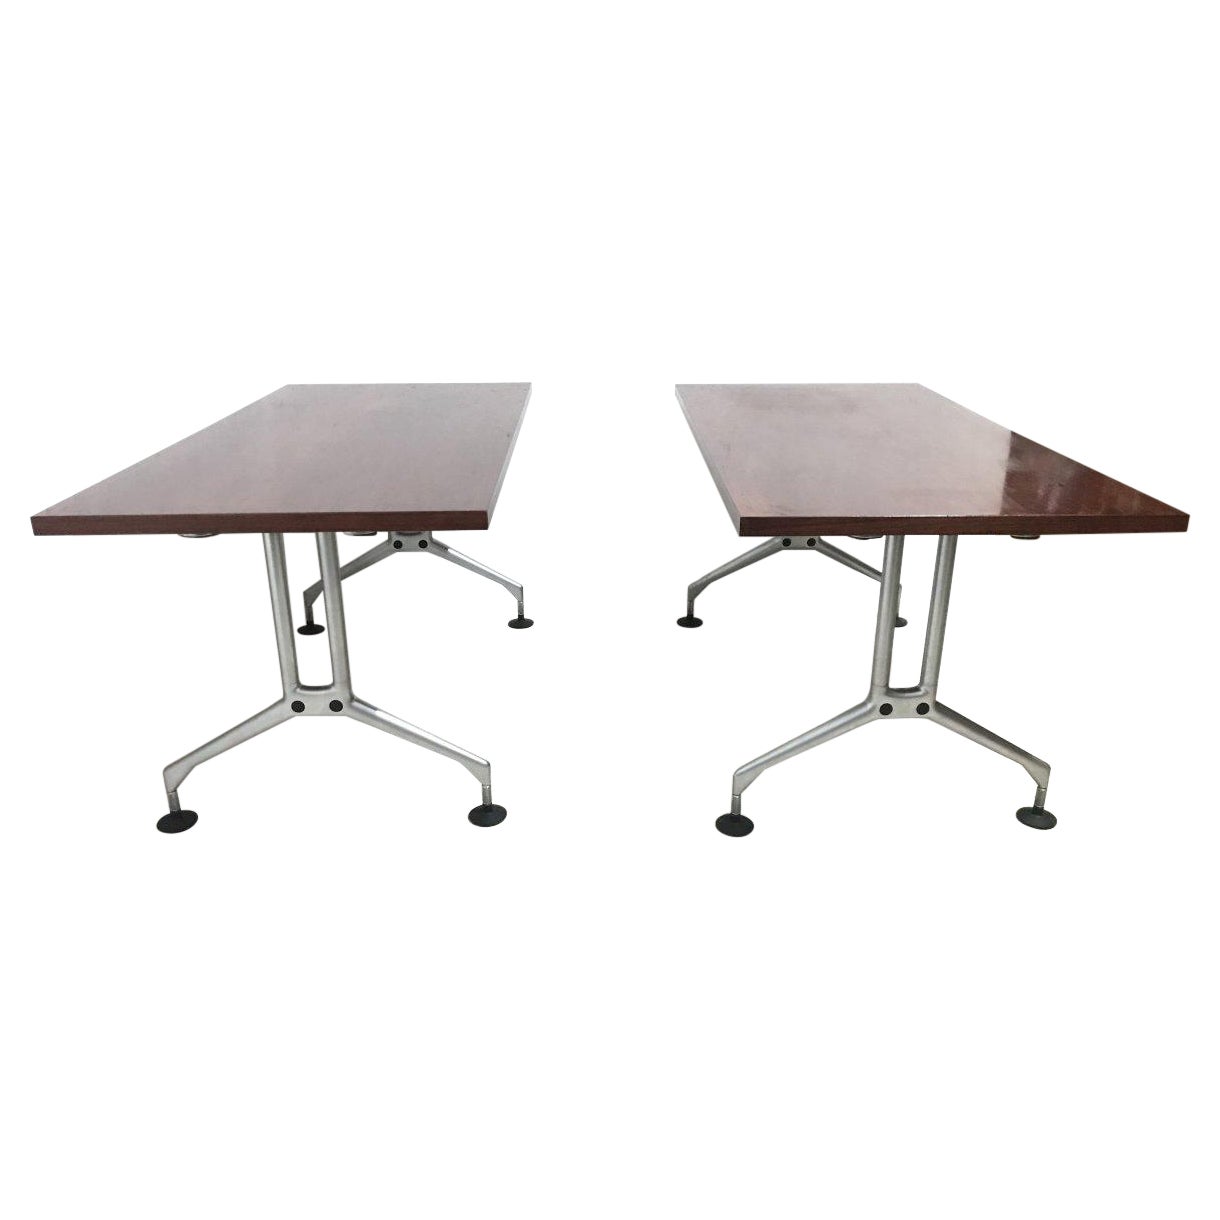 Antônio Citterio, Vitra, Two Aluminium Dining or Desk Tables with Walnut Tops